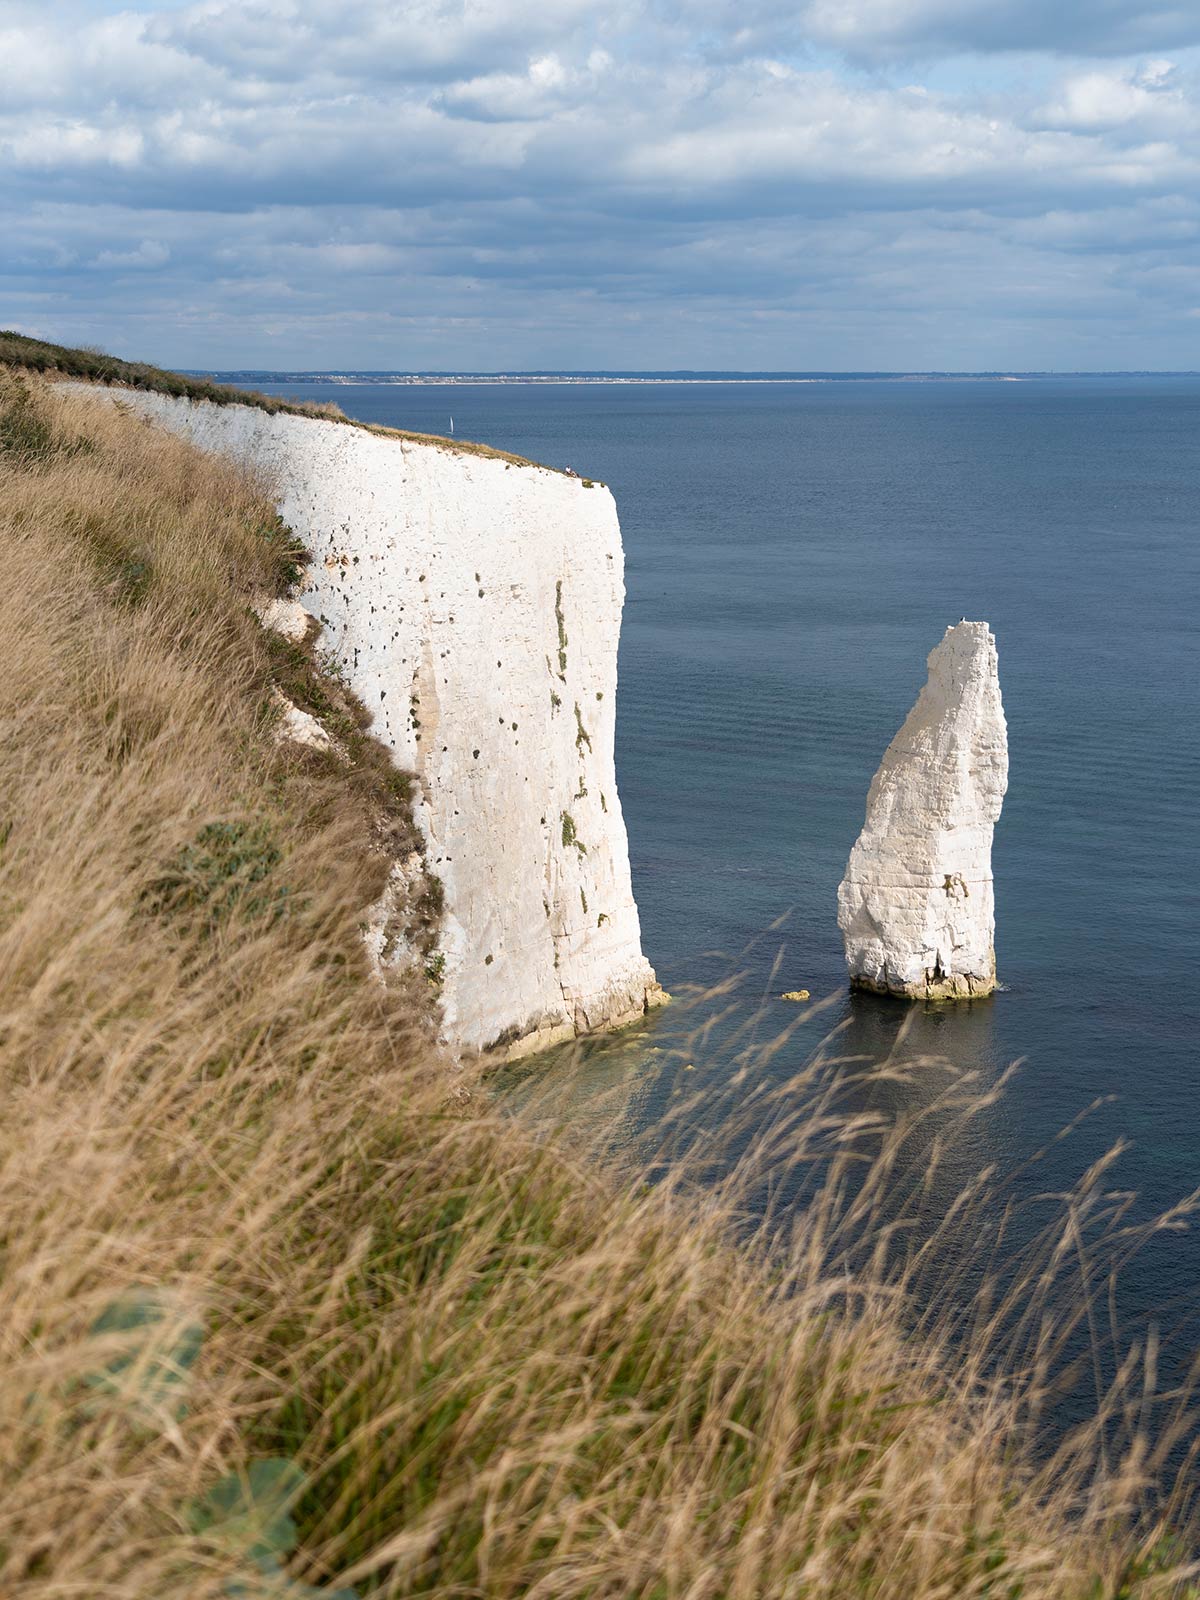 The Pinnacle, Rocher du Vieil Harry, Dorset, Côte jurassique, Angleterre / Old Harry Rocks, Dorset, Jurassic Coast, UK